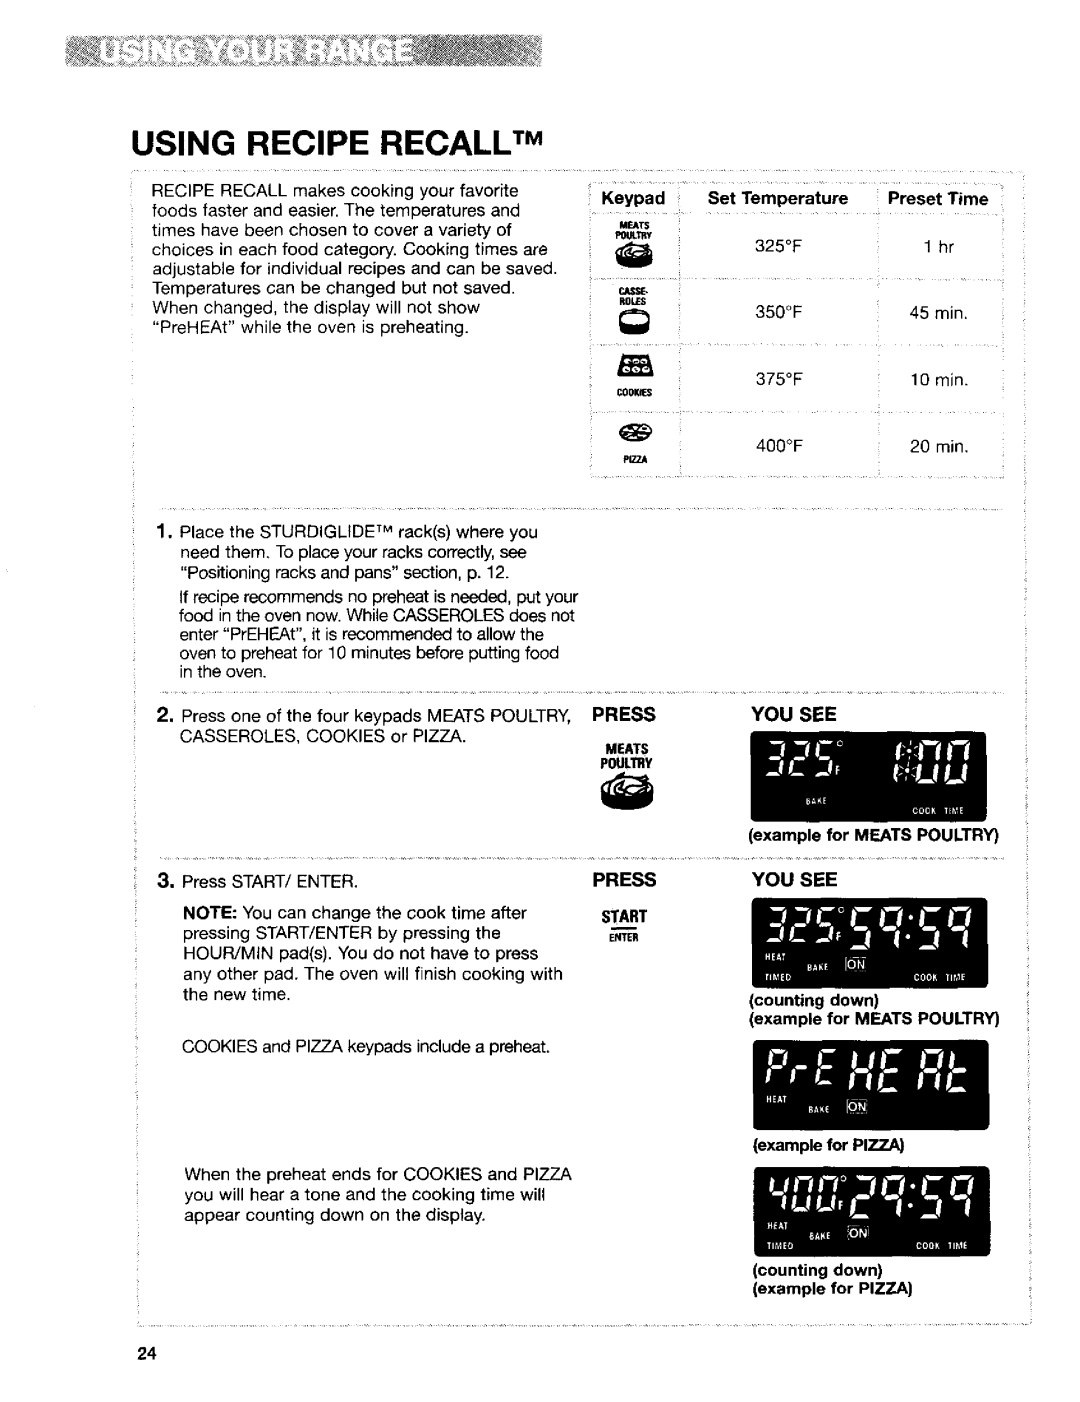 Kenmore 665.95822, 665.95824 manual Using Recipe Recall Tm, Keypad Set Temperature Preset Time, Press, Start, counting down 